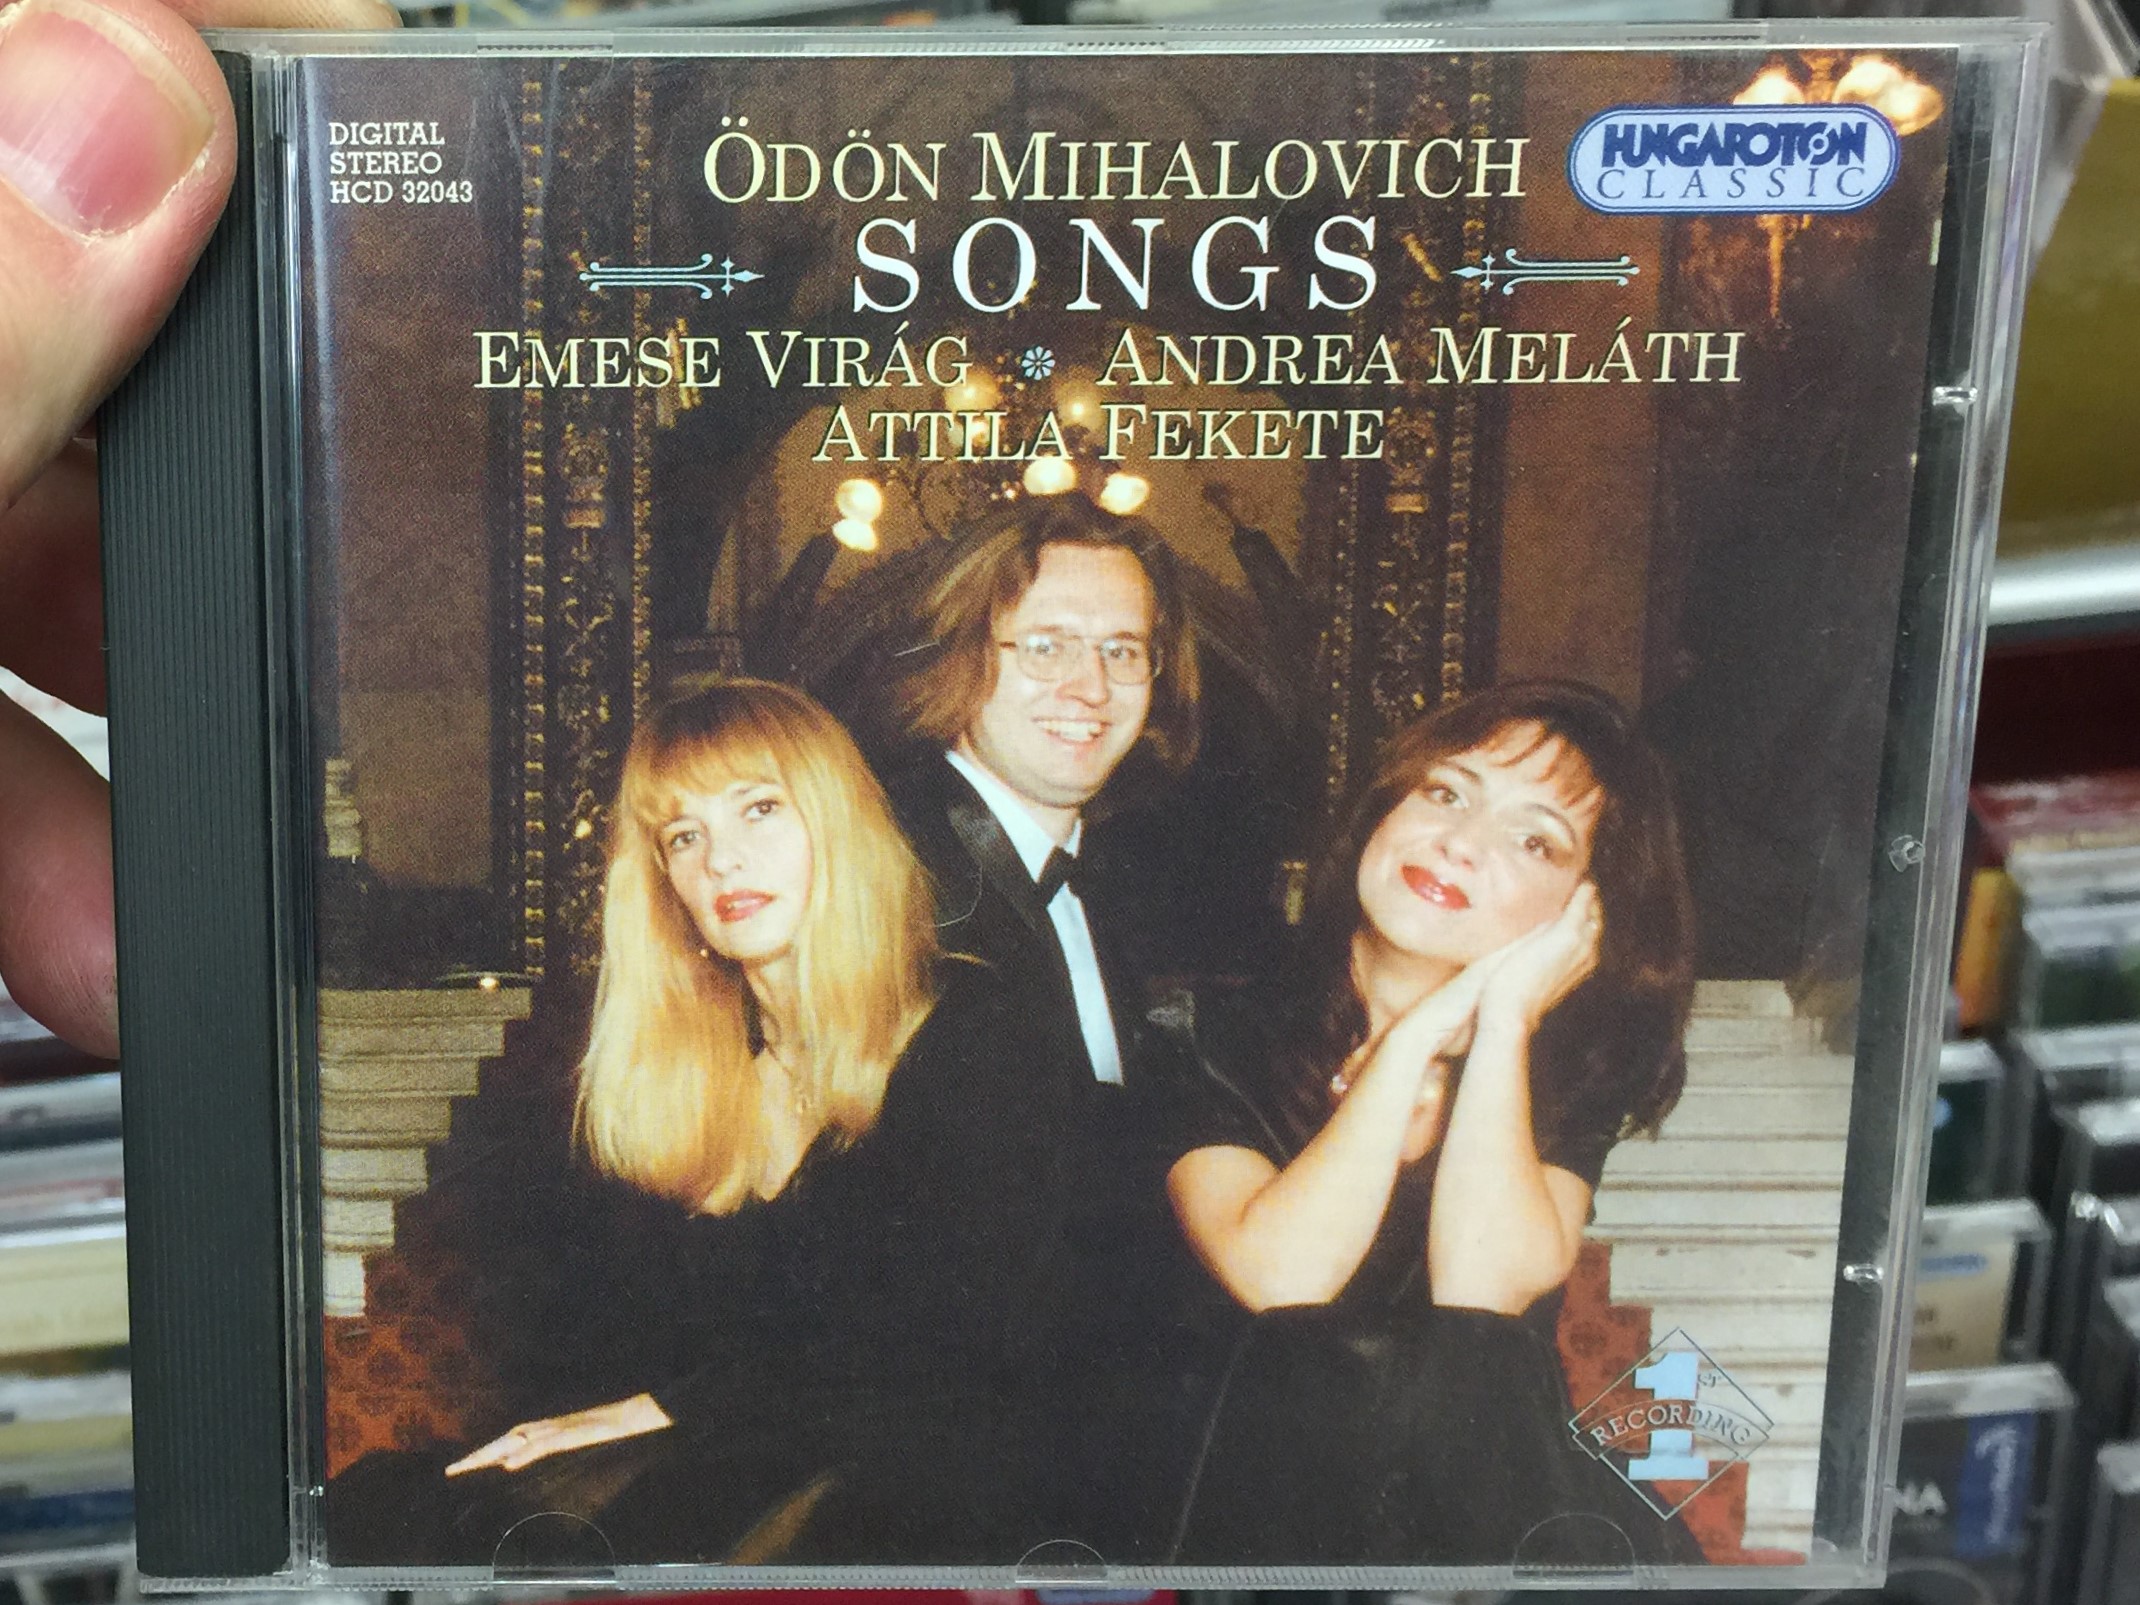 odon-mihalovich-songs-emese-virag-andrea-melath-attila-fekete-hungaroton-classic-audio-cd-2001-stereo-hcd-32043-1-.jpg